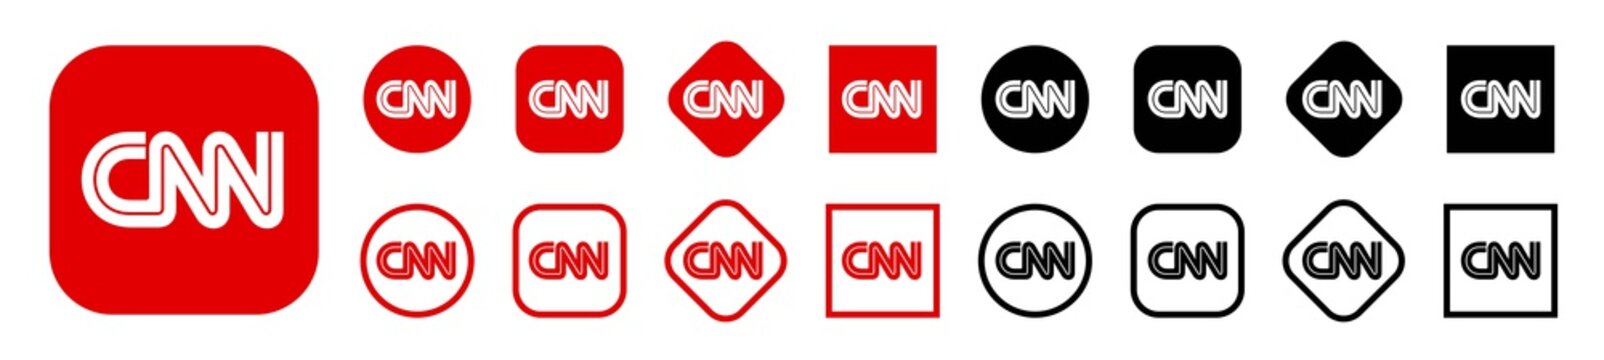 Set of different style icon SNN, social media news icons illustration, SNN logo